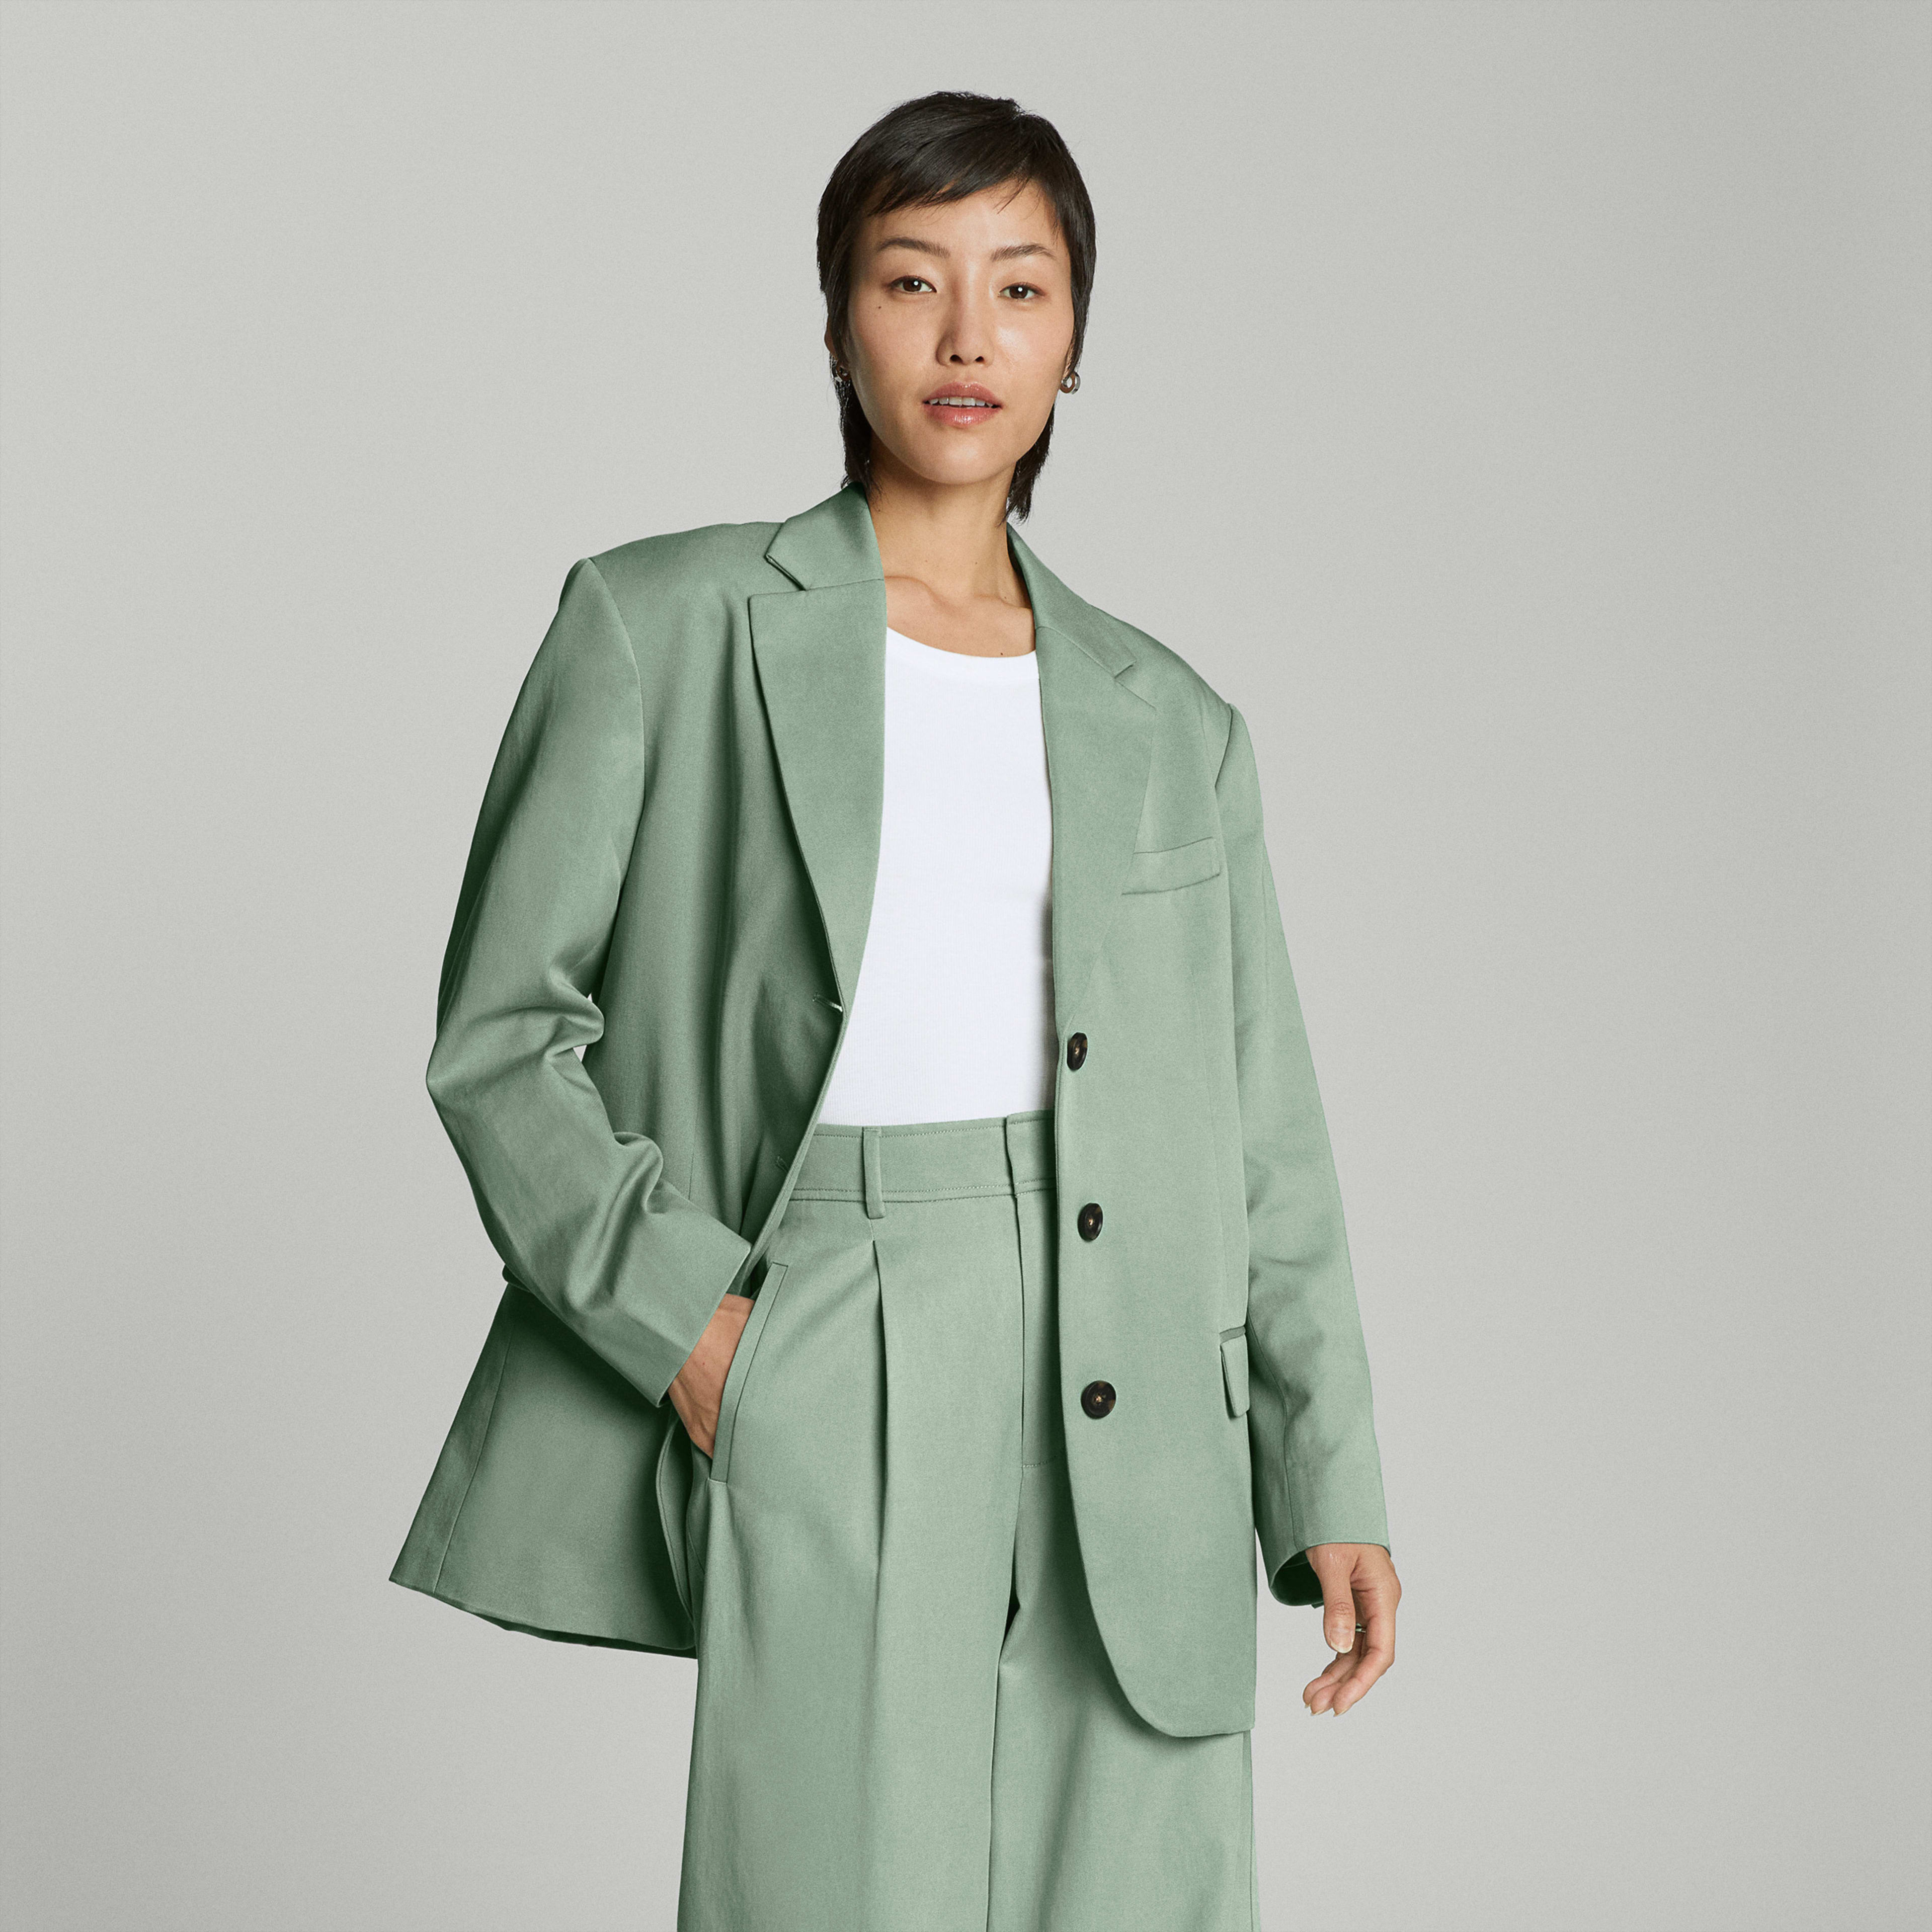 Women's '80s Blazer by Everlane in Green, Size 0